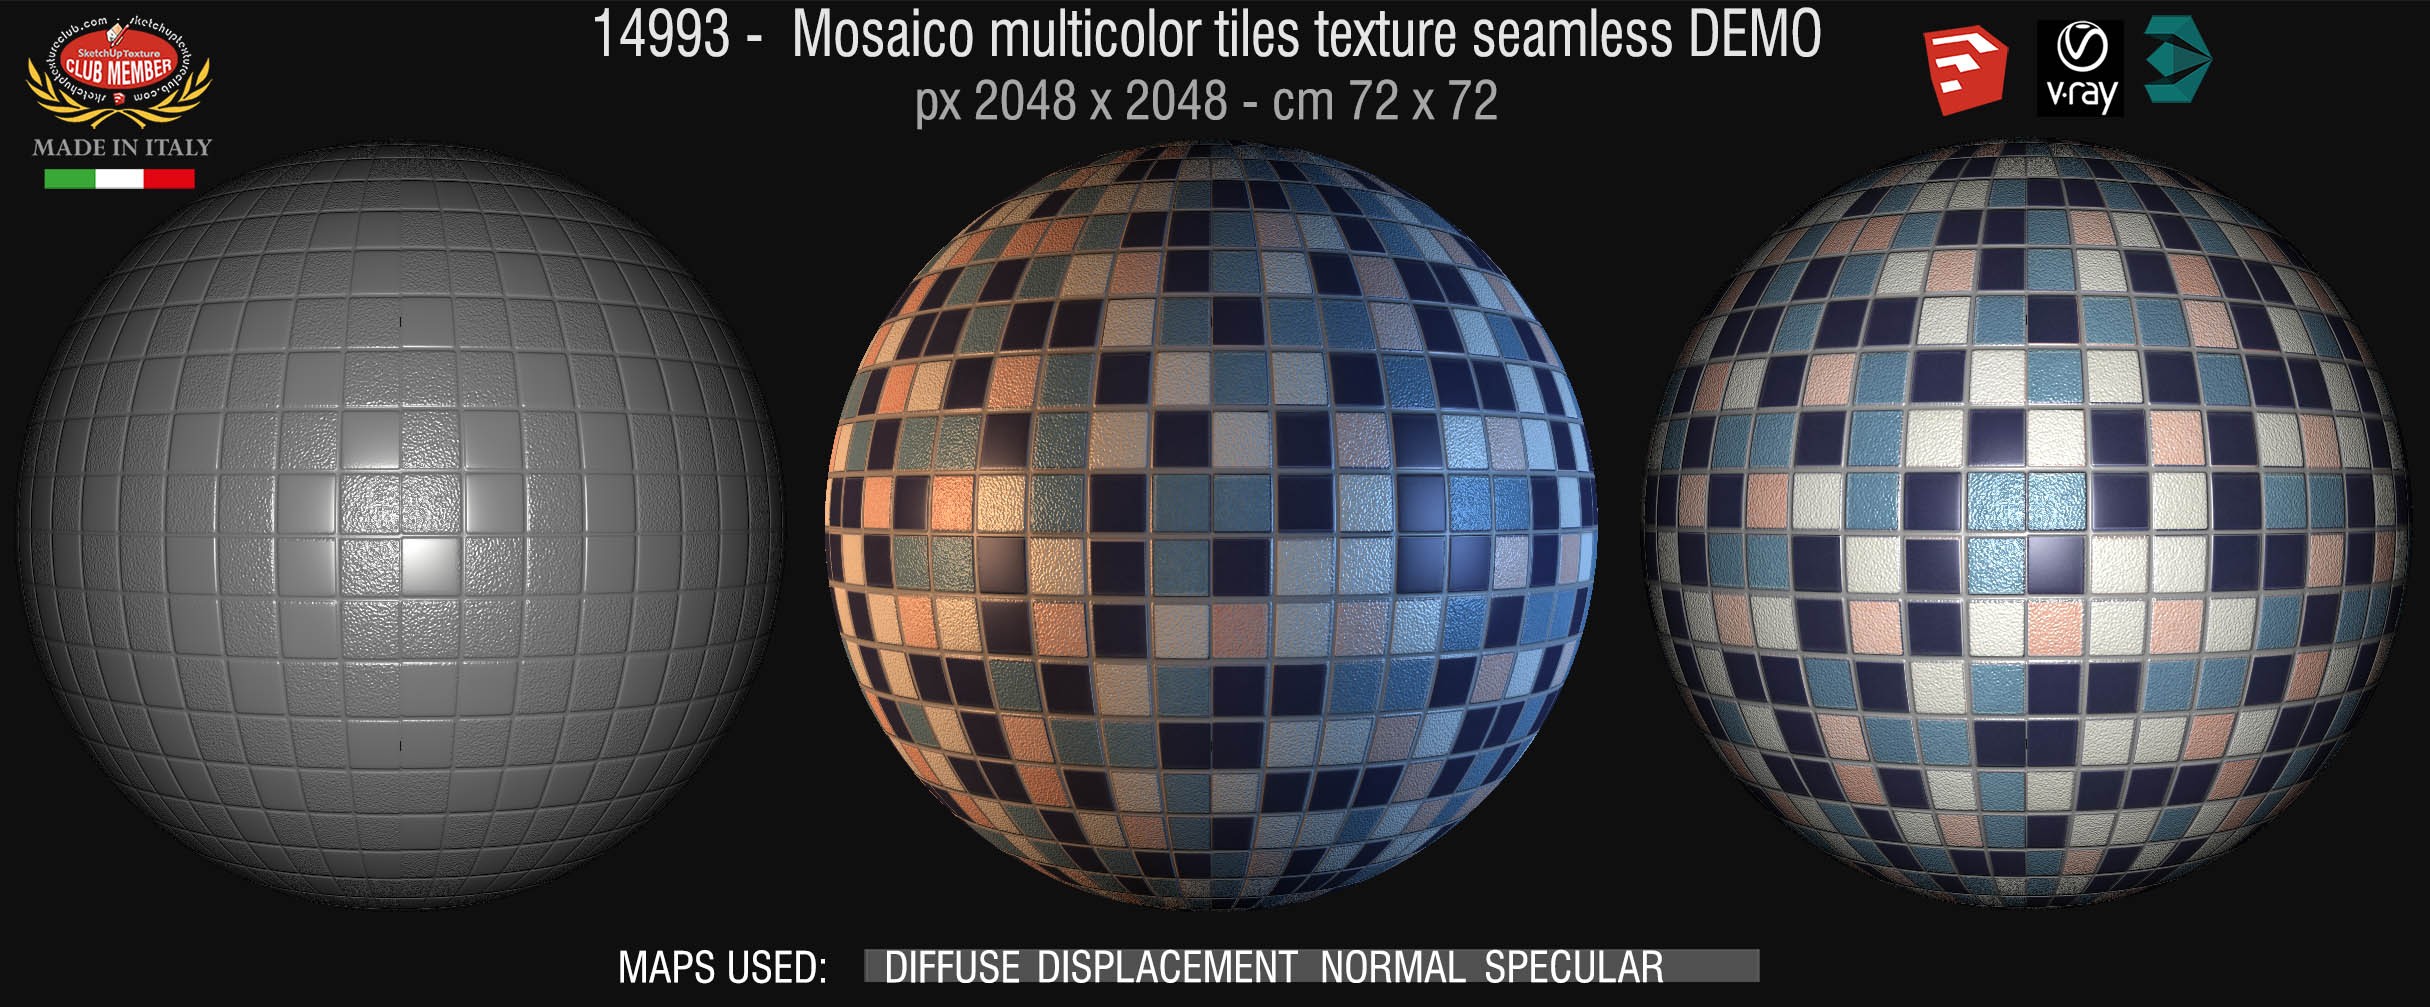 14993 Mosaico multicolor tiles texture seamless + maps DEMO